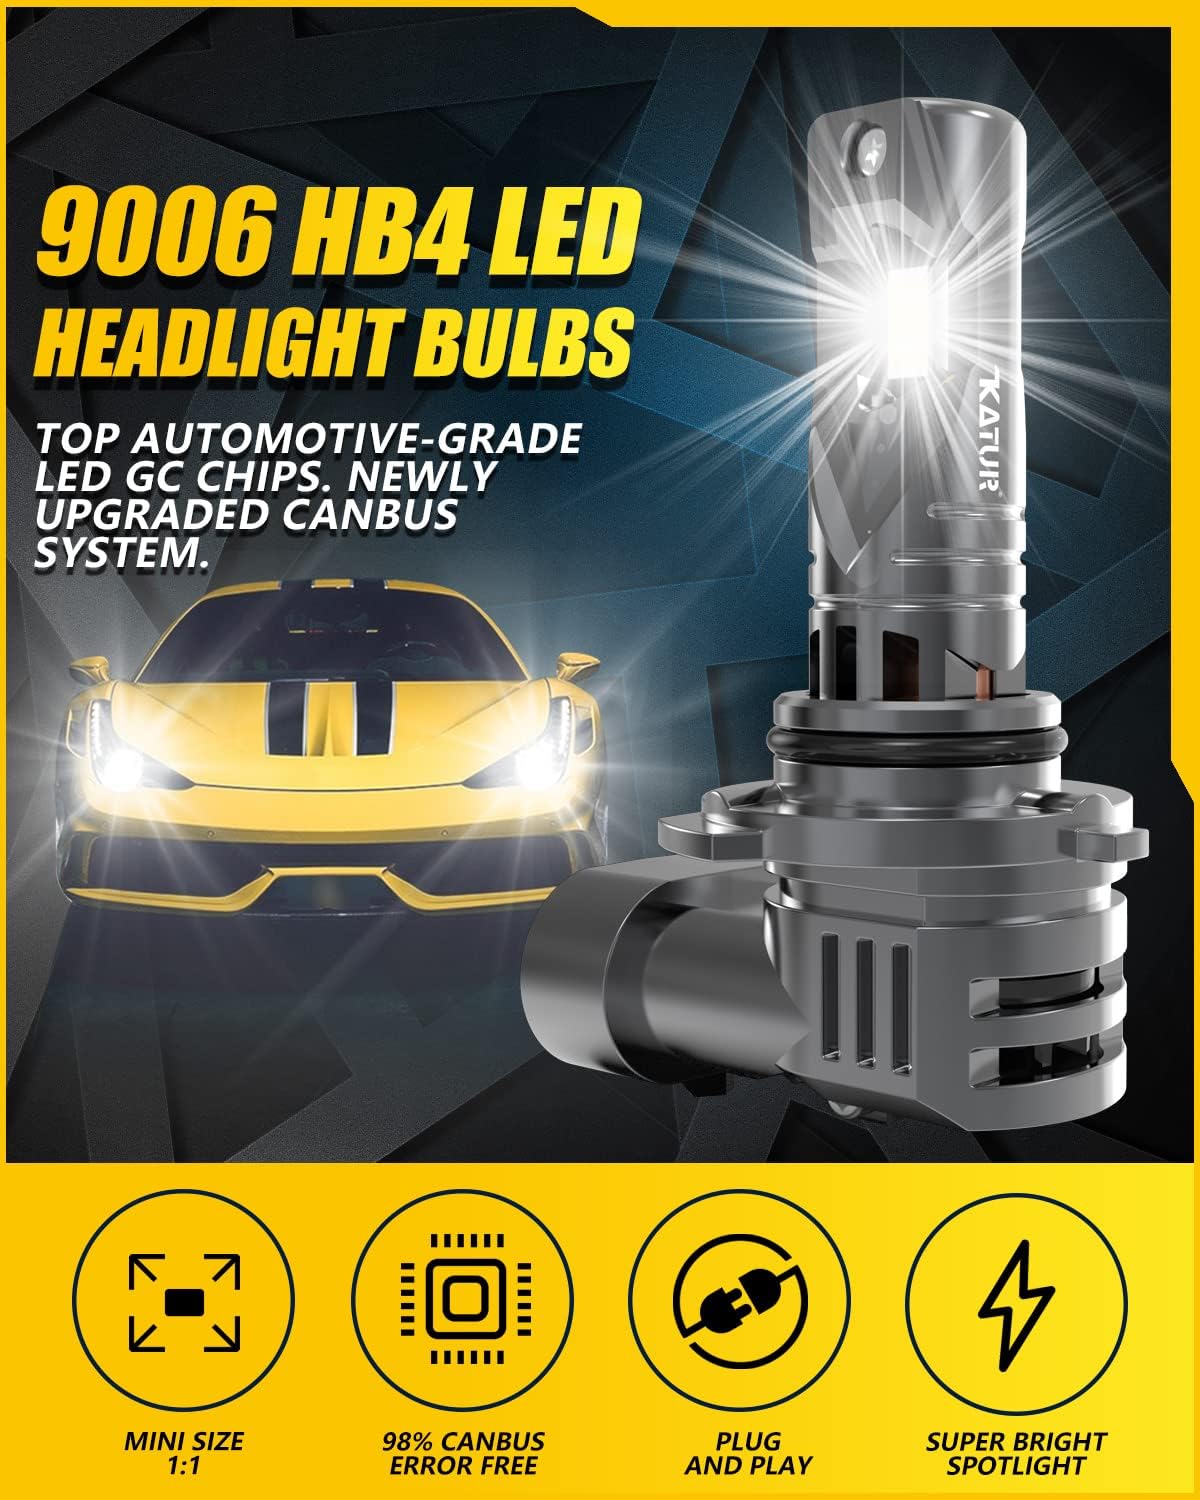 KATUR 9012 LED Headlight Bulbs 6000K Xenon White 1:1 Mini Size All-in-One Conversion Kit Plug and Play HIR2 LED Fog Light Bulb, Pack of 2